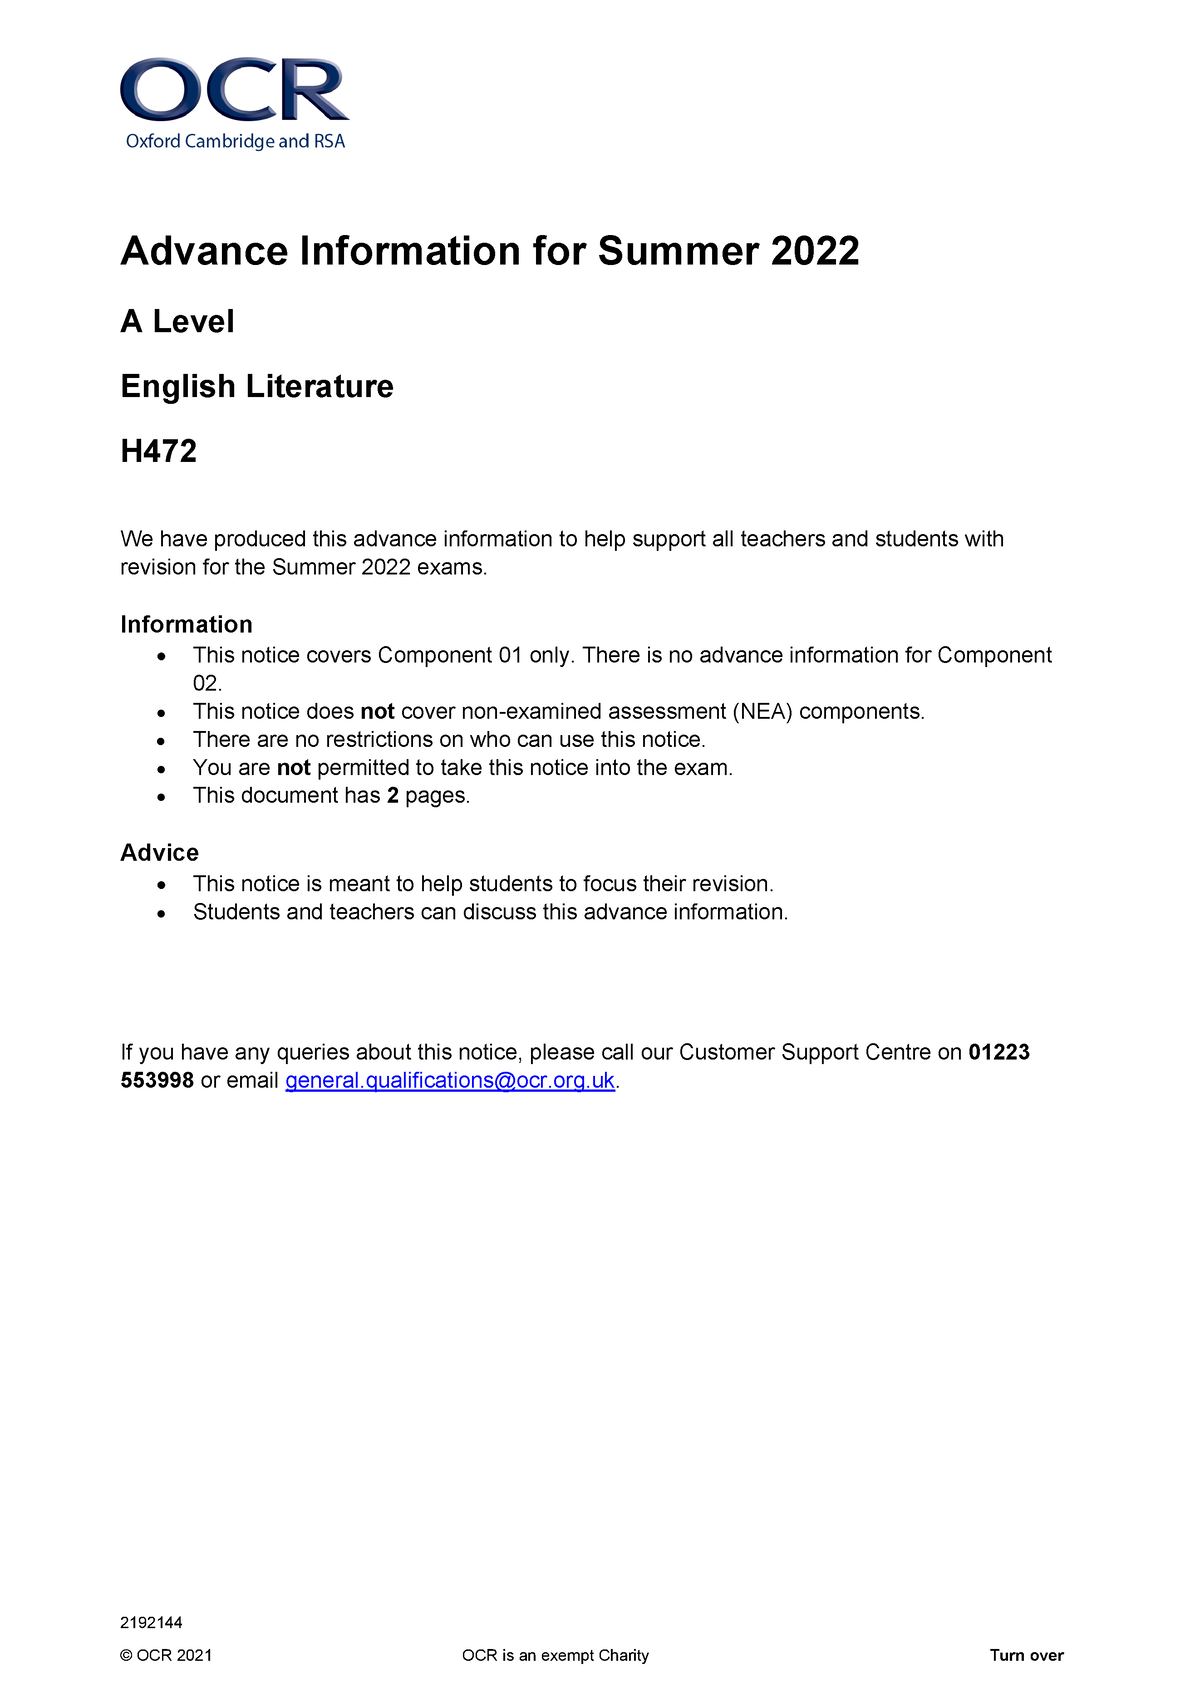 h472-a-level-english-literature-advance-information-jun2022-2192144